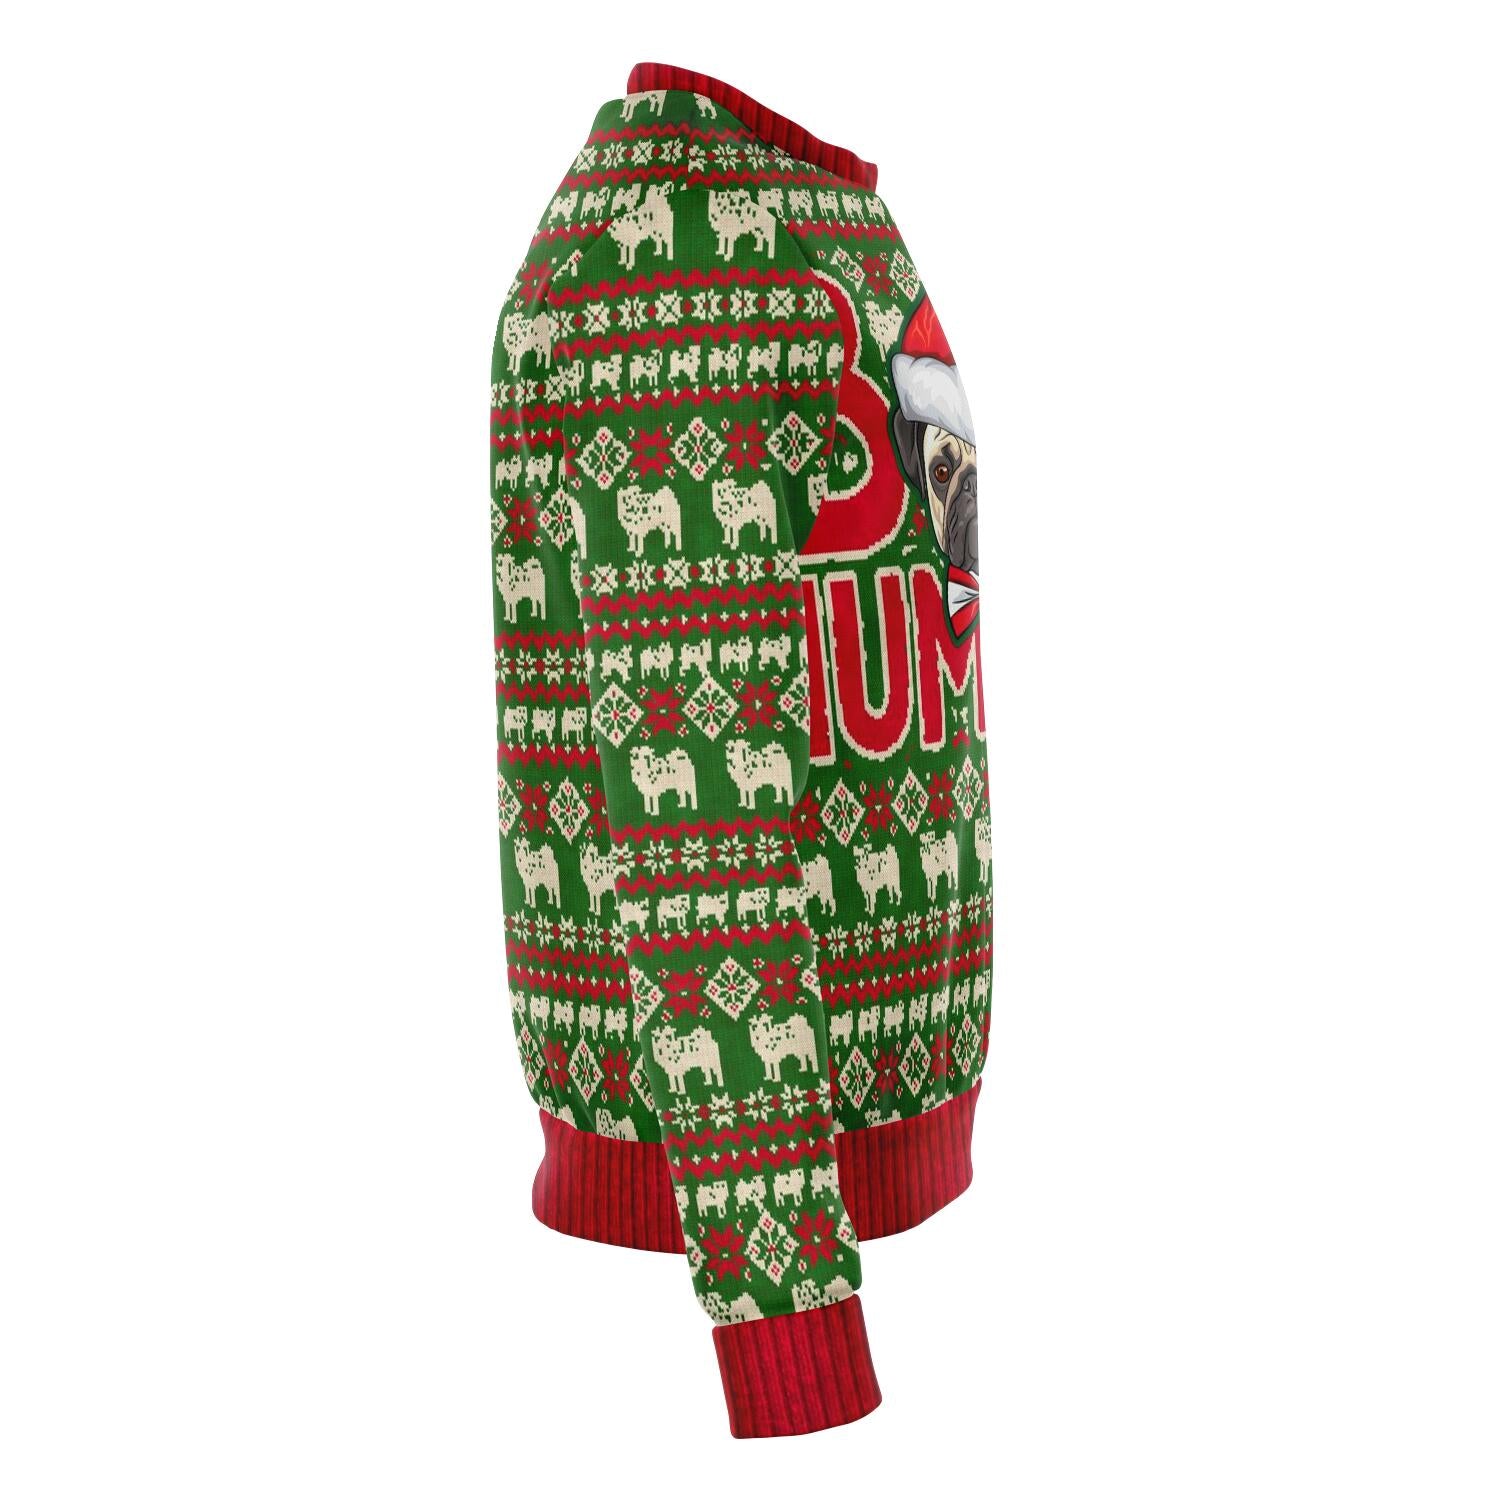 Pug Ugly Christmas Sweater, Pugs Dog Bah Humpug Funny Print Party Cotton Crewneck Sweatshirt Xmas Holiday Men Women Christmas Gift Plus Size Starcove Fashion